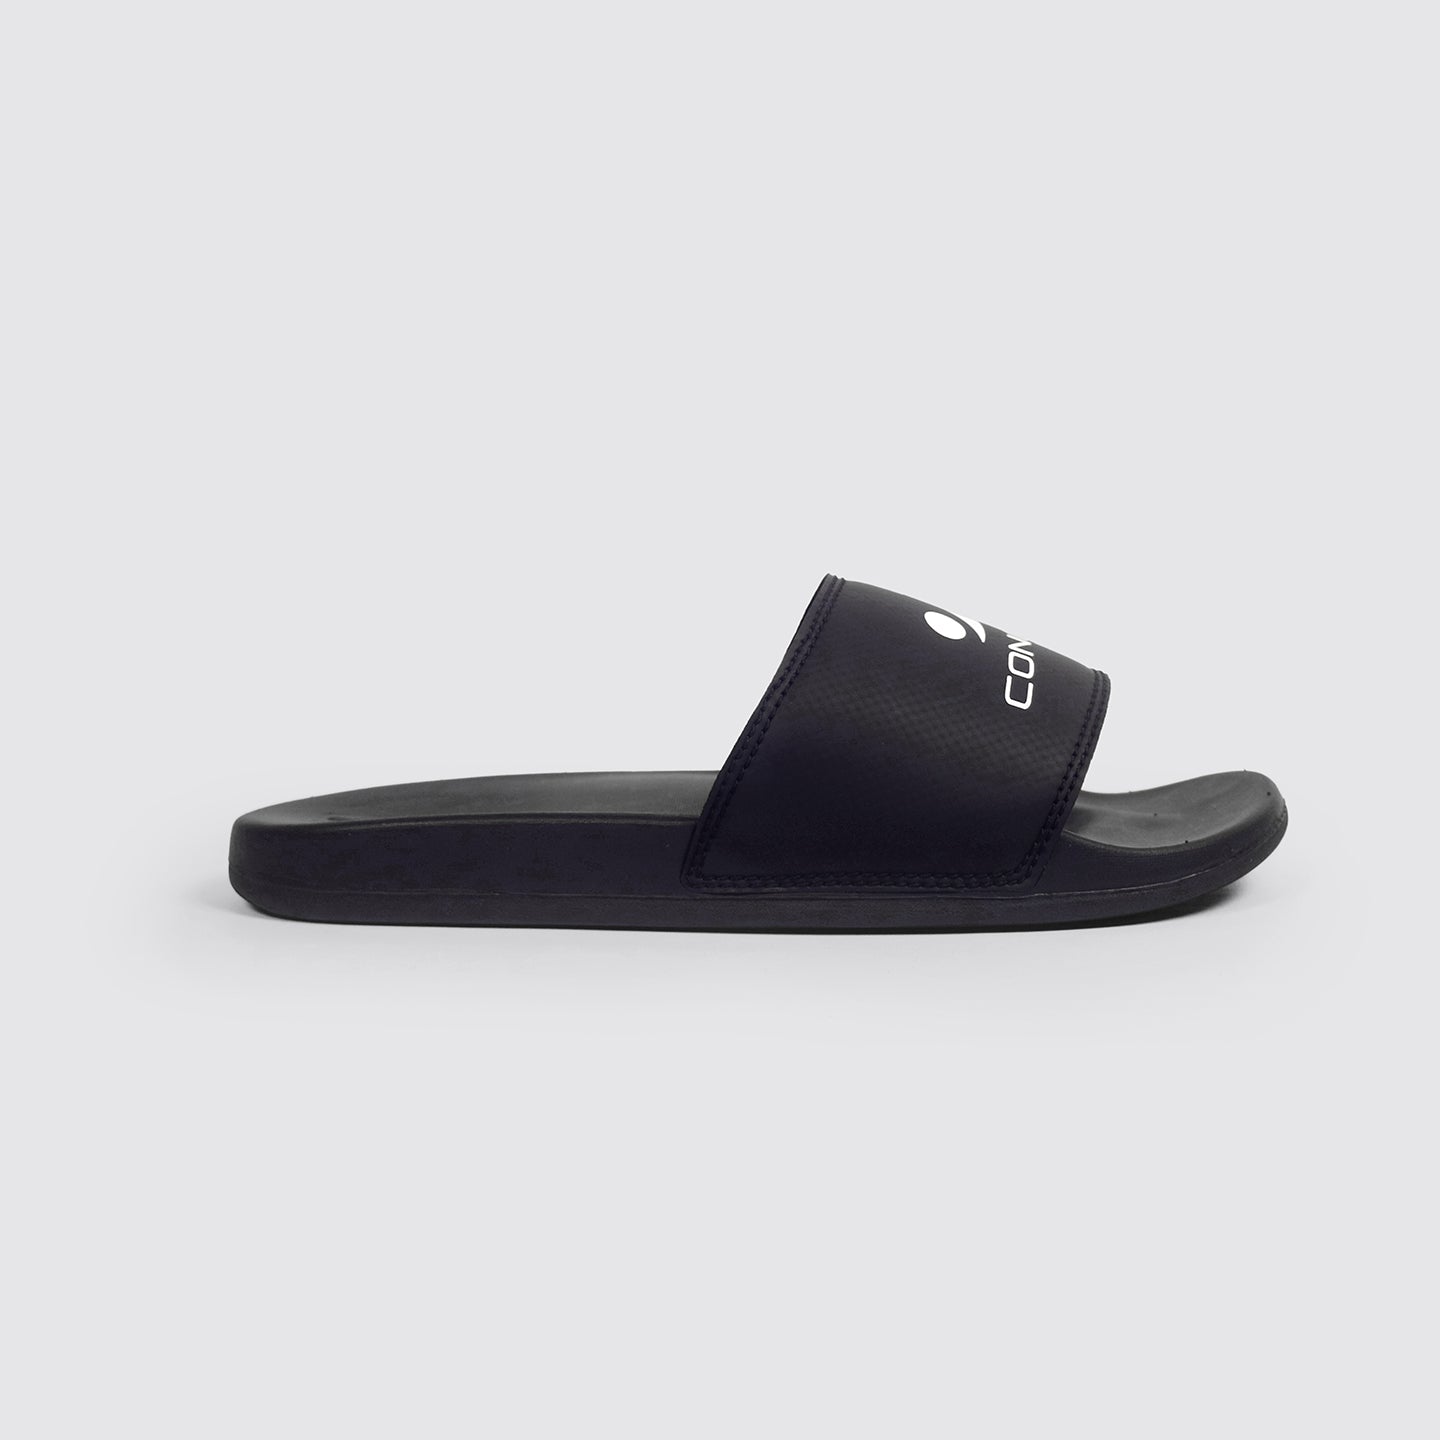 Sandal Bagg10 - Black / Black